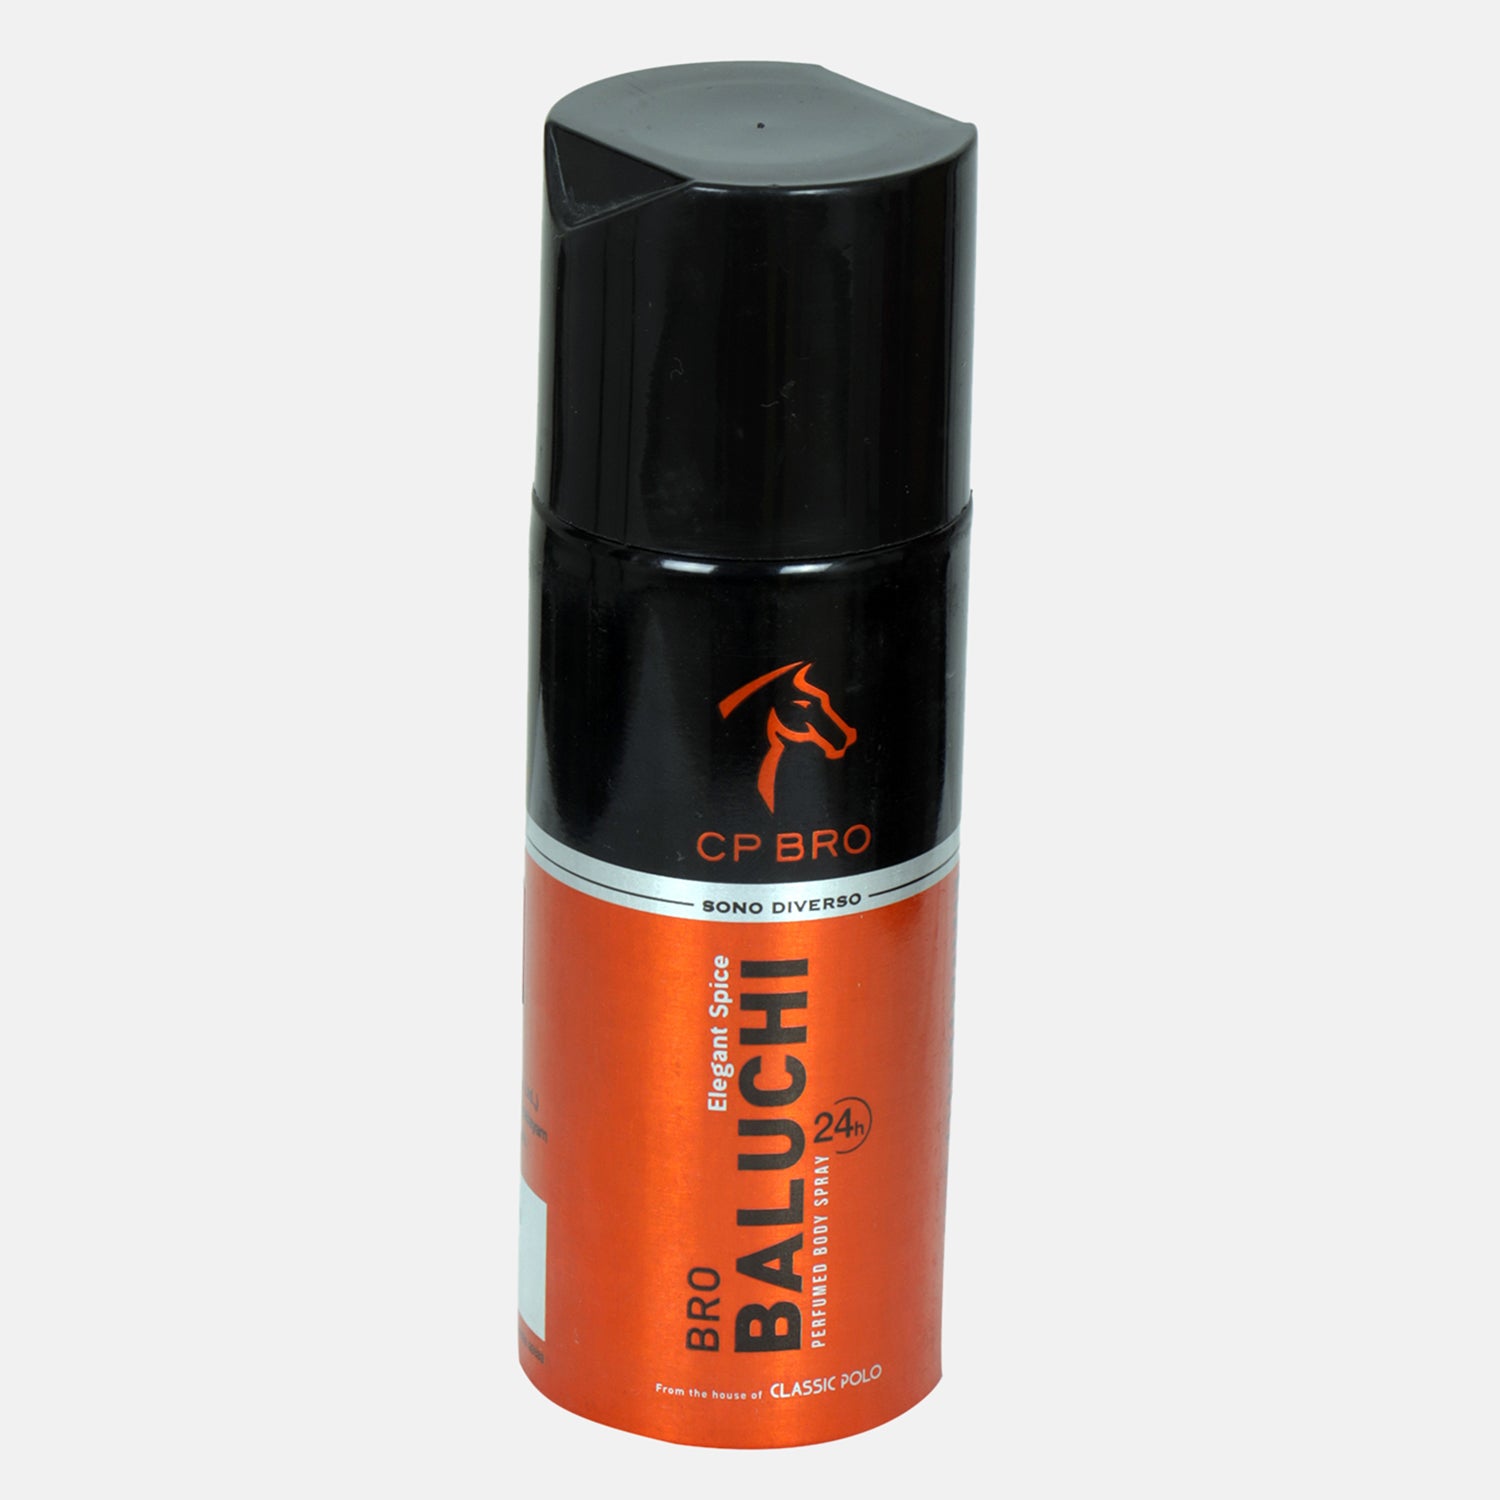 CP BRO Perfumed Body Spray - Baluchi